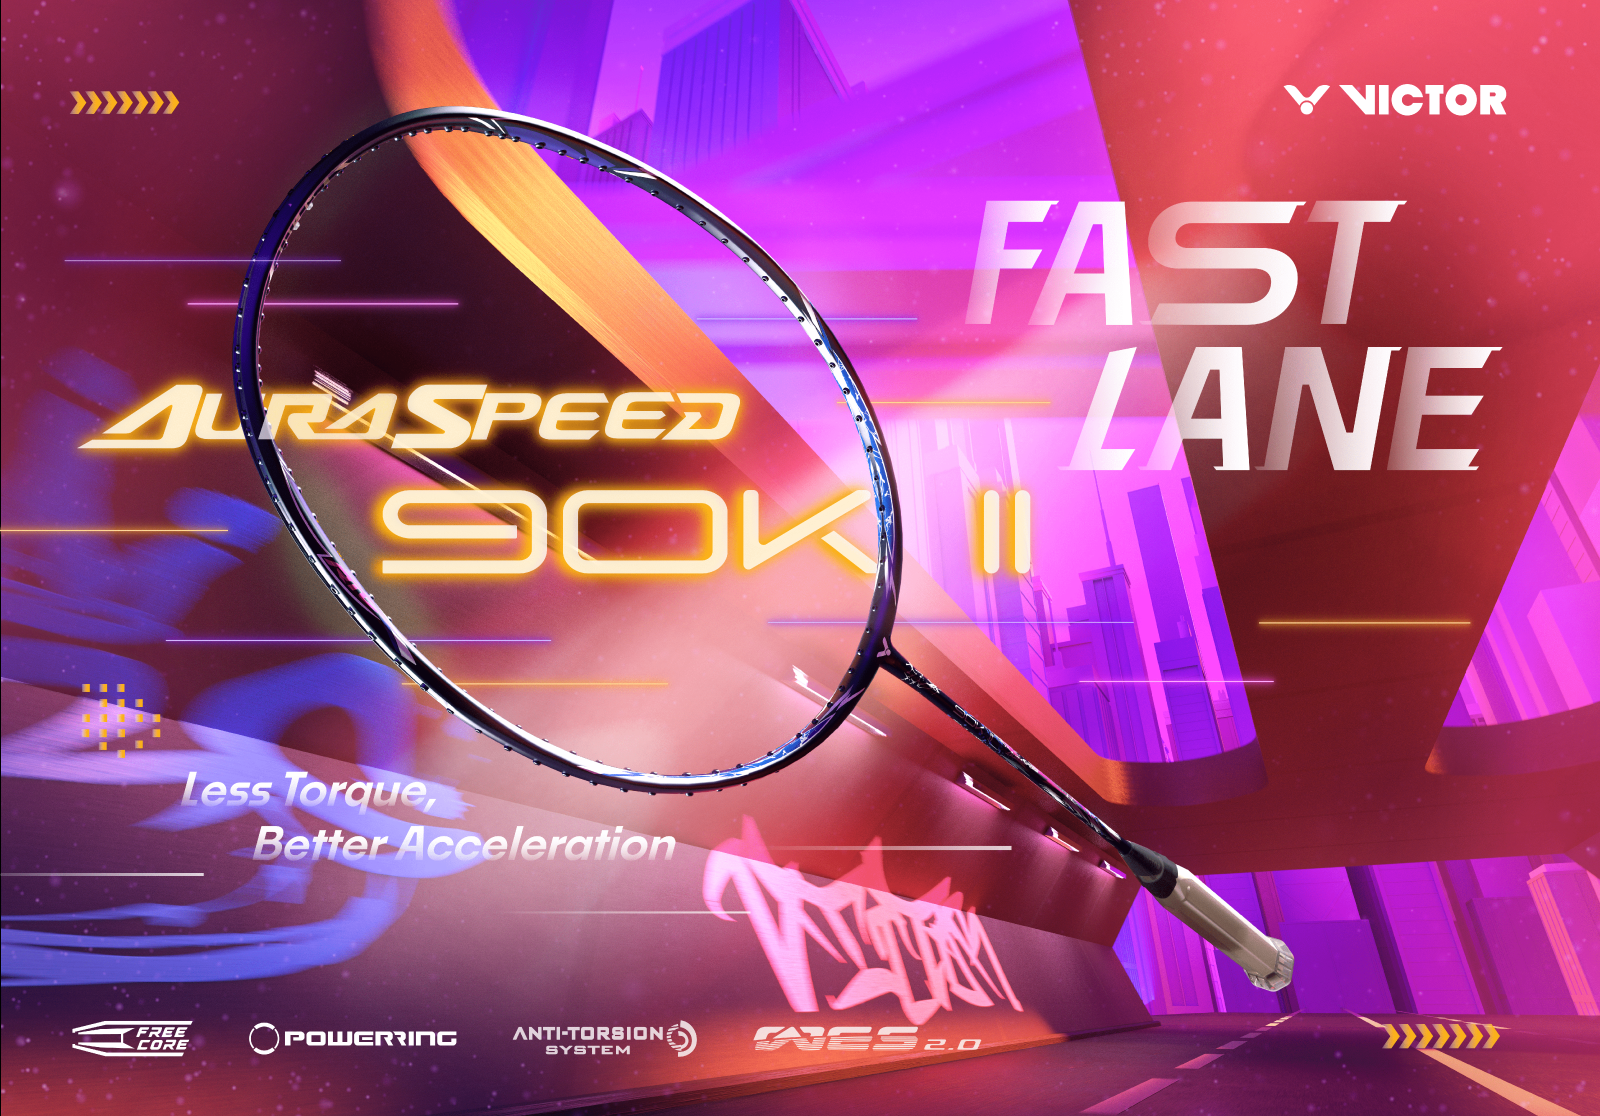 Victor AuraSpeed 90K II (ARS 90K II) Badminton Racket (Black) Nydhi